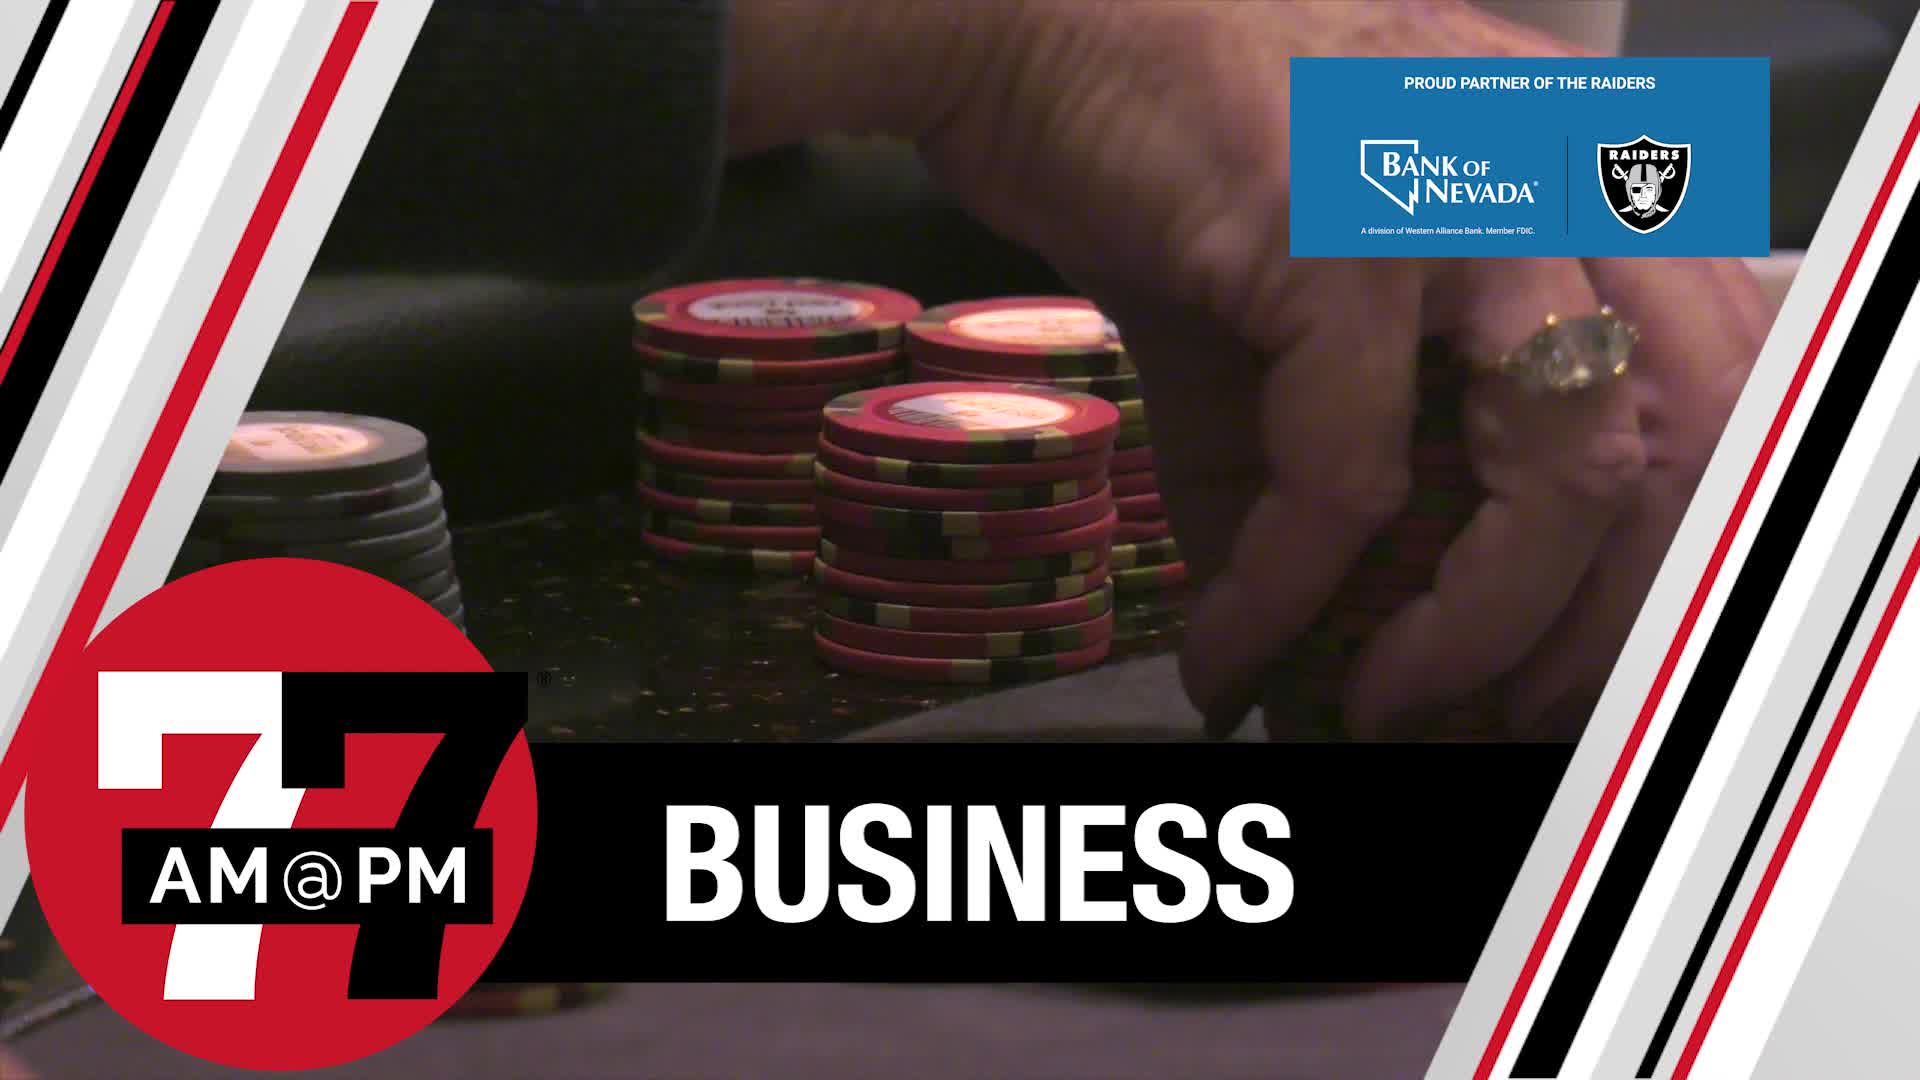 Canadian Gambler files suit over jackpot